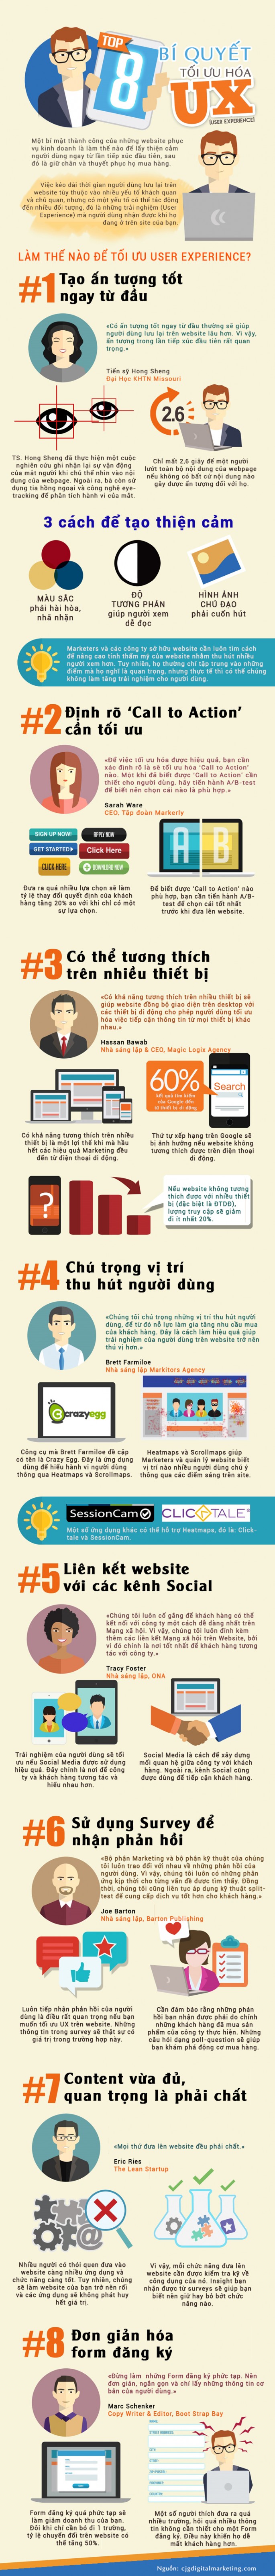 8 tips - Vietnamese version